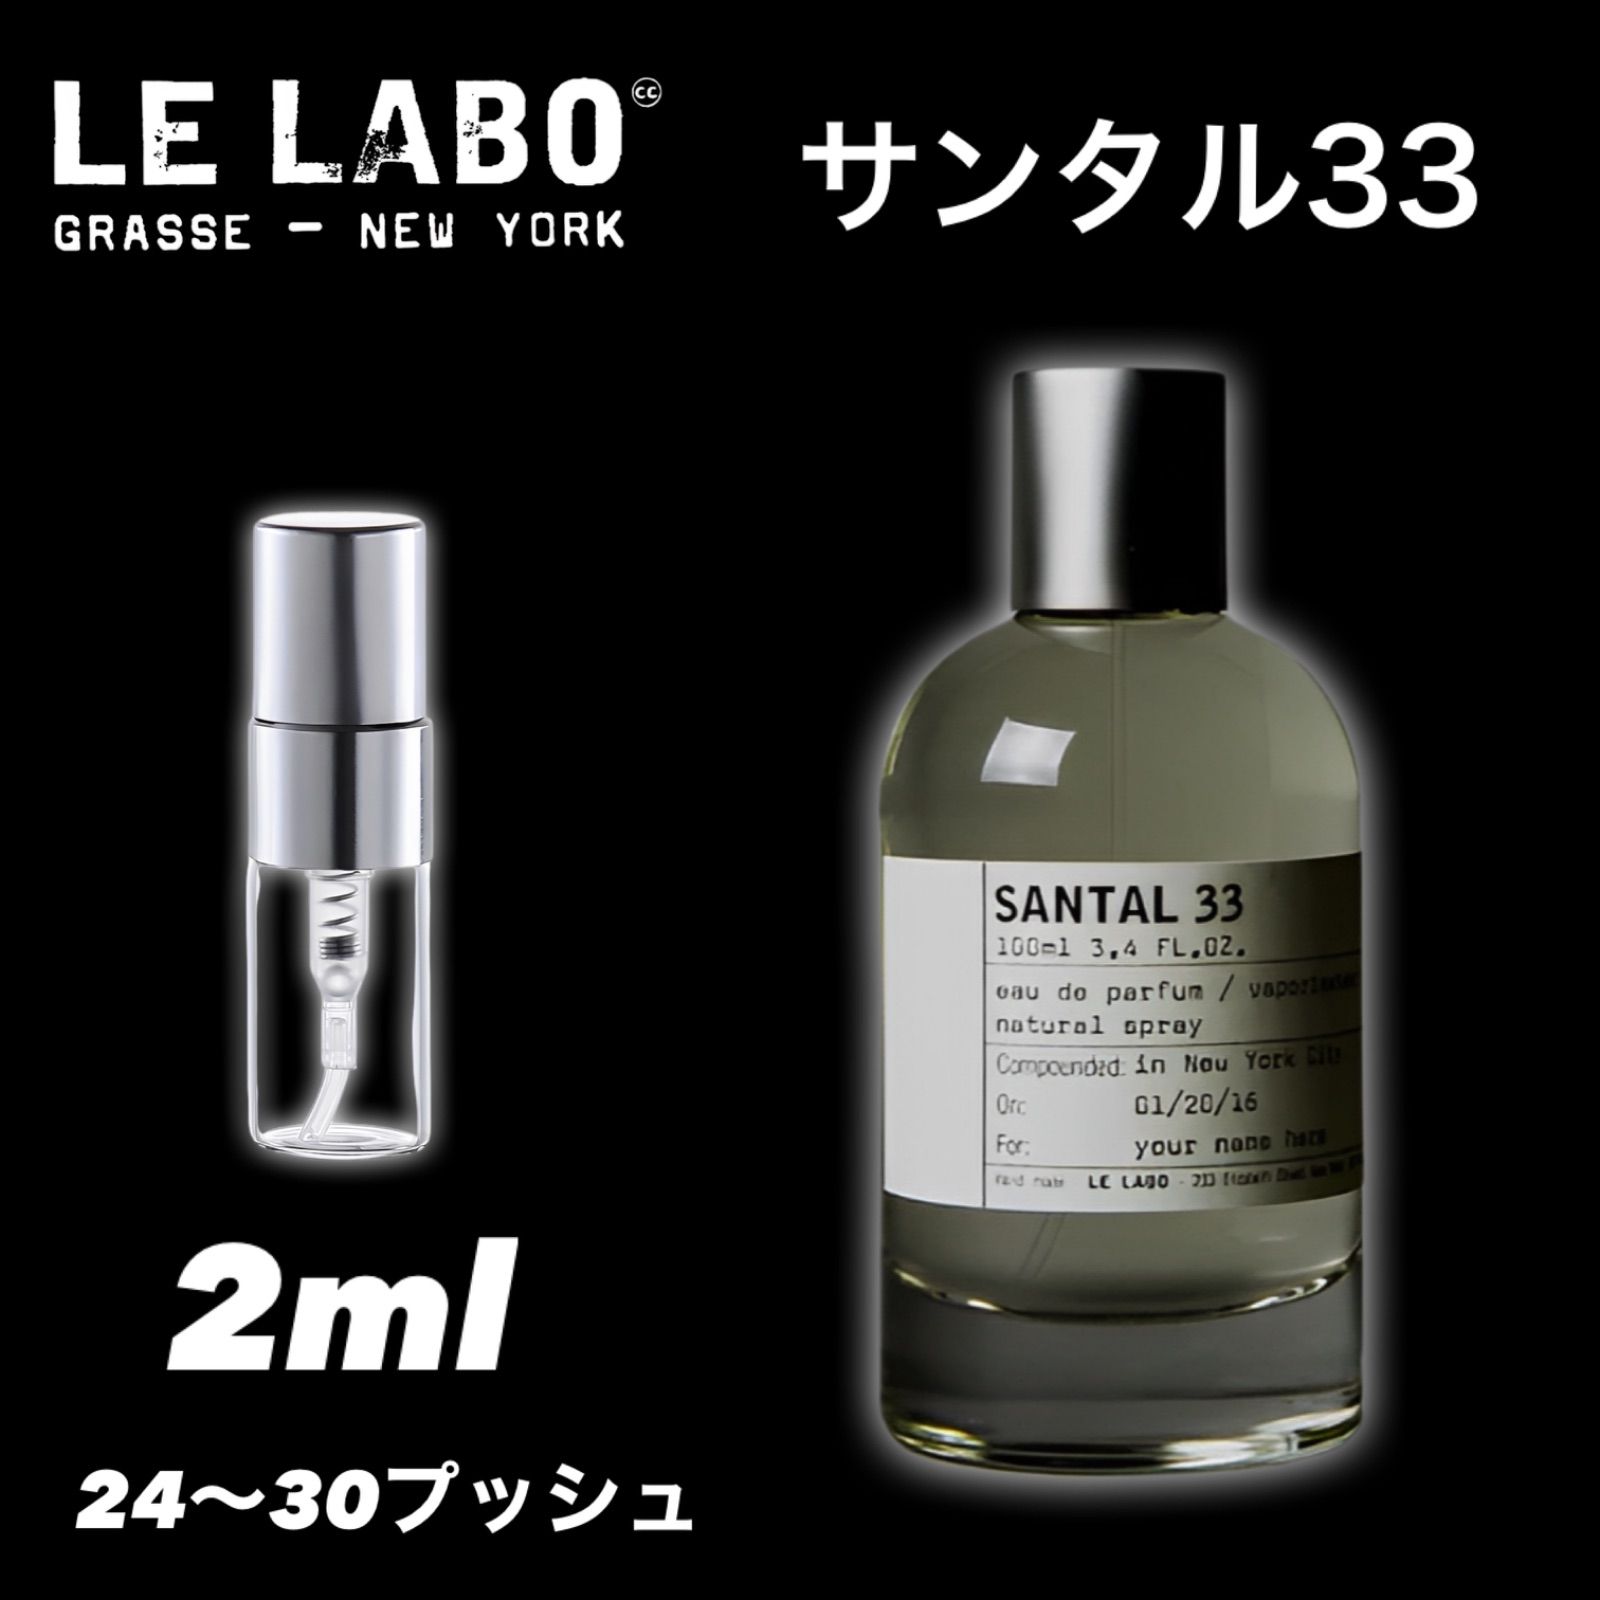 Santal 33 サンプル Le Labo - 香水(ユニセックス)